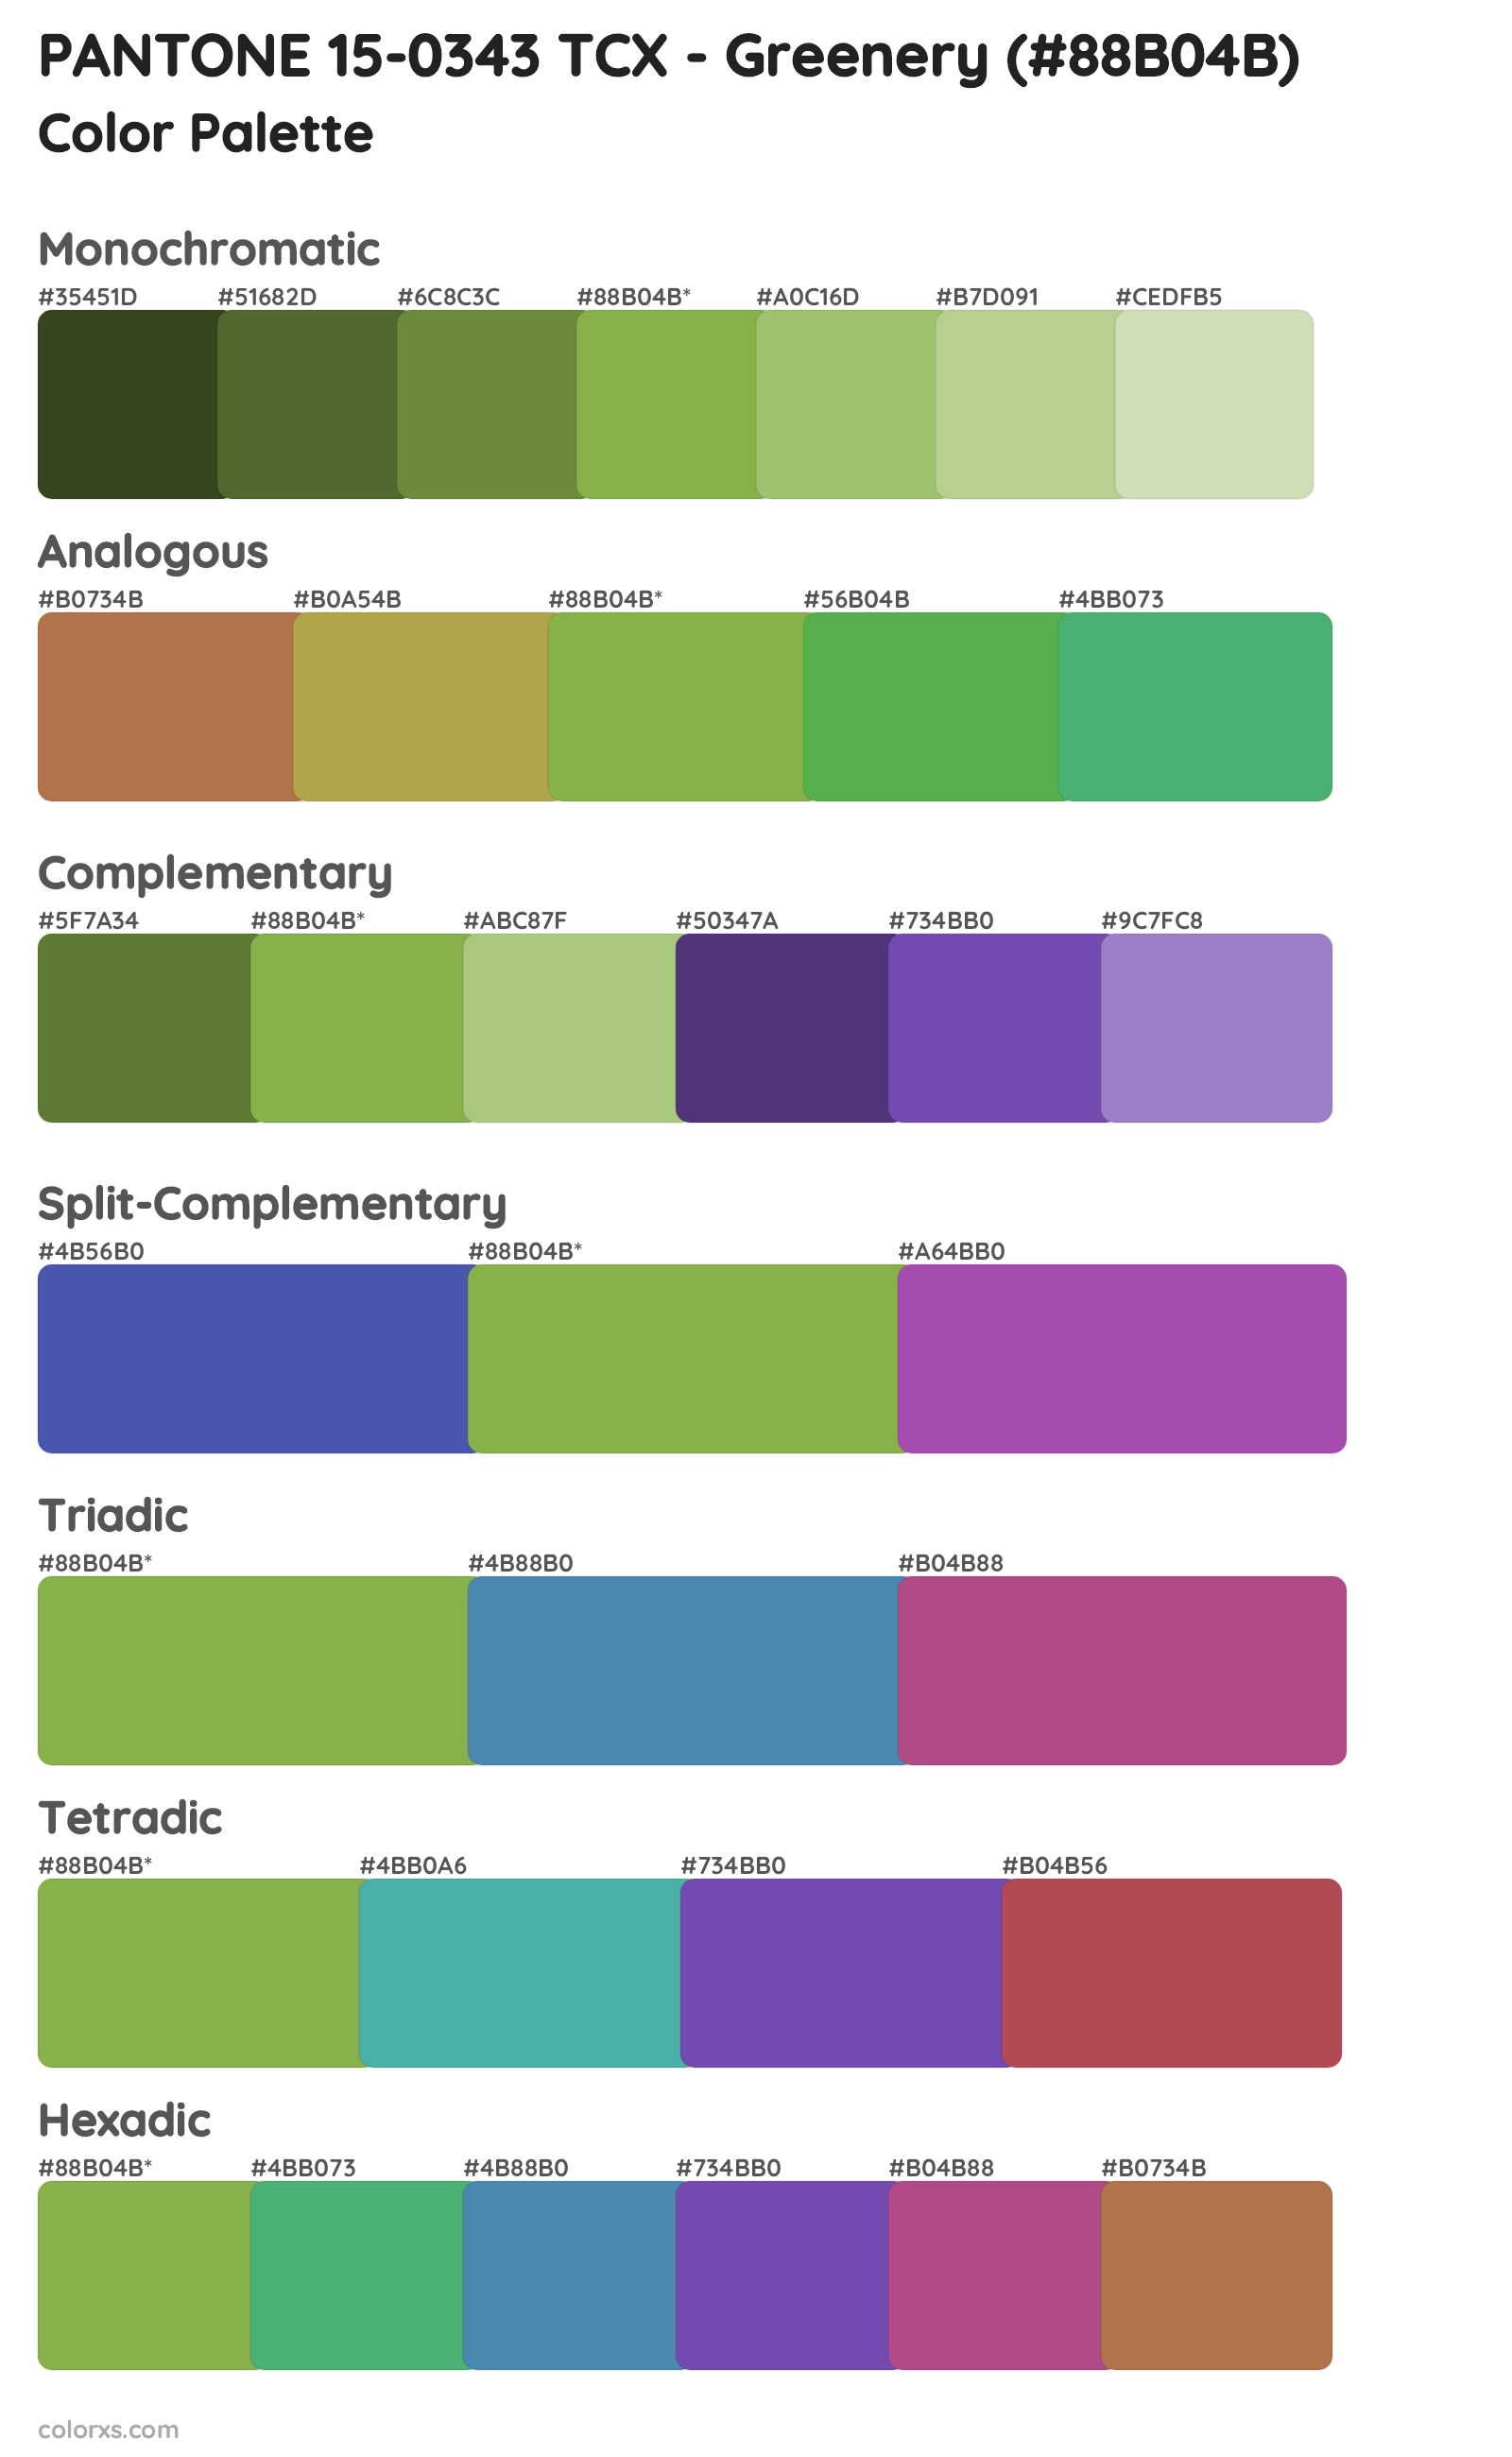 PANTONE 15-0343 TCX - Greenery Color Scheme Palettes